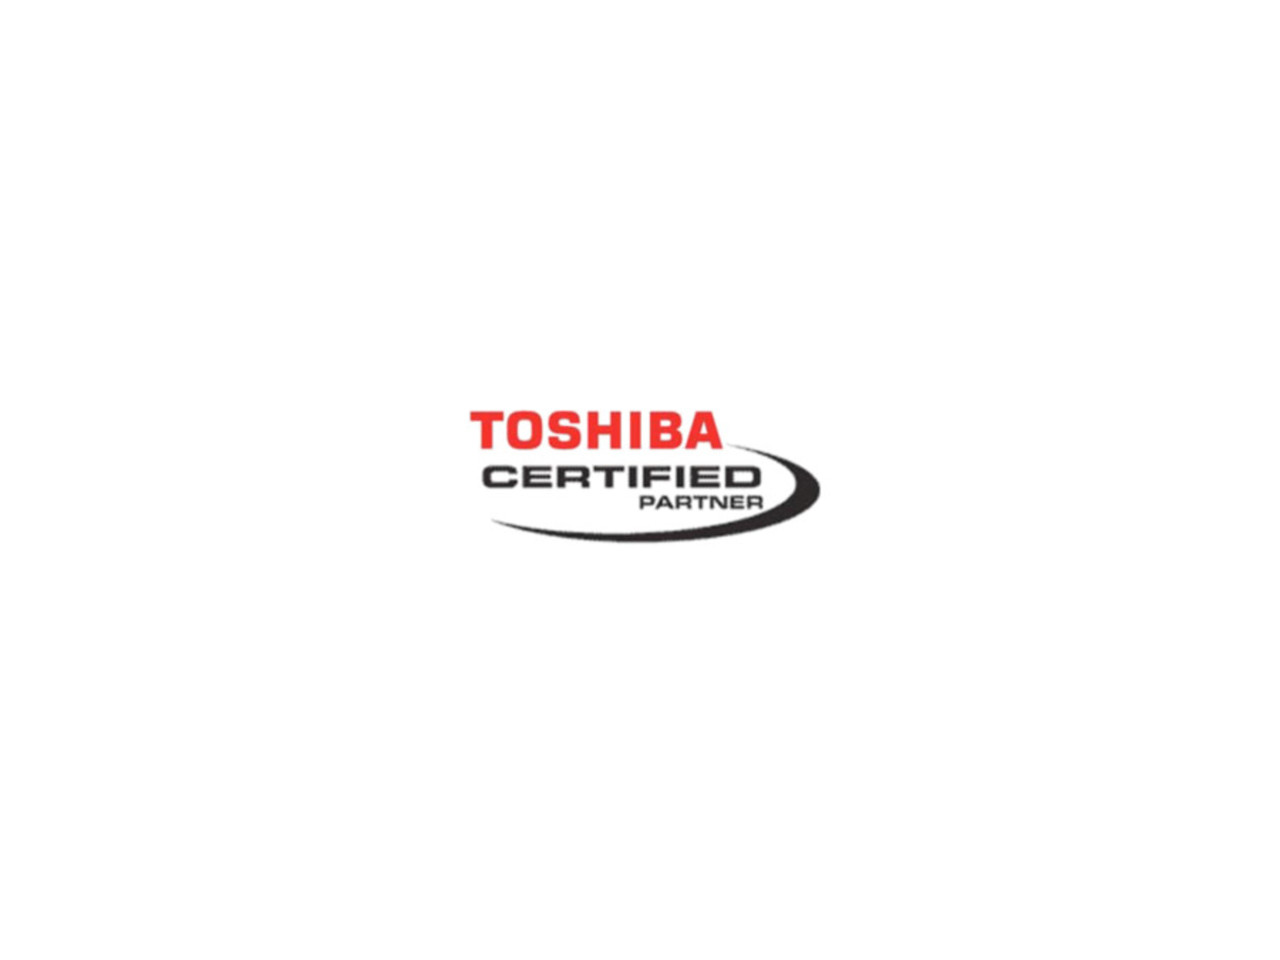 Toshiba Certified Partner